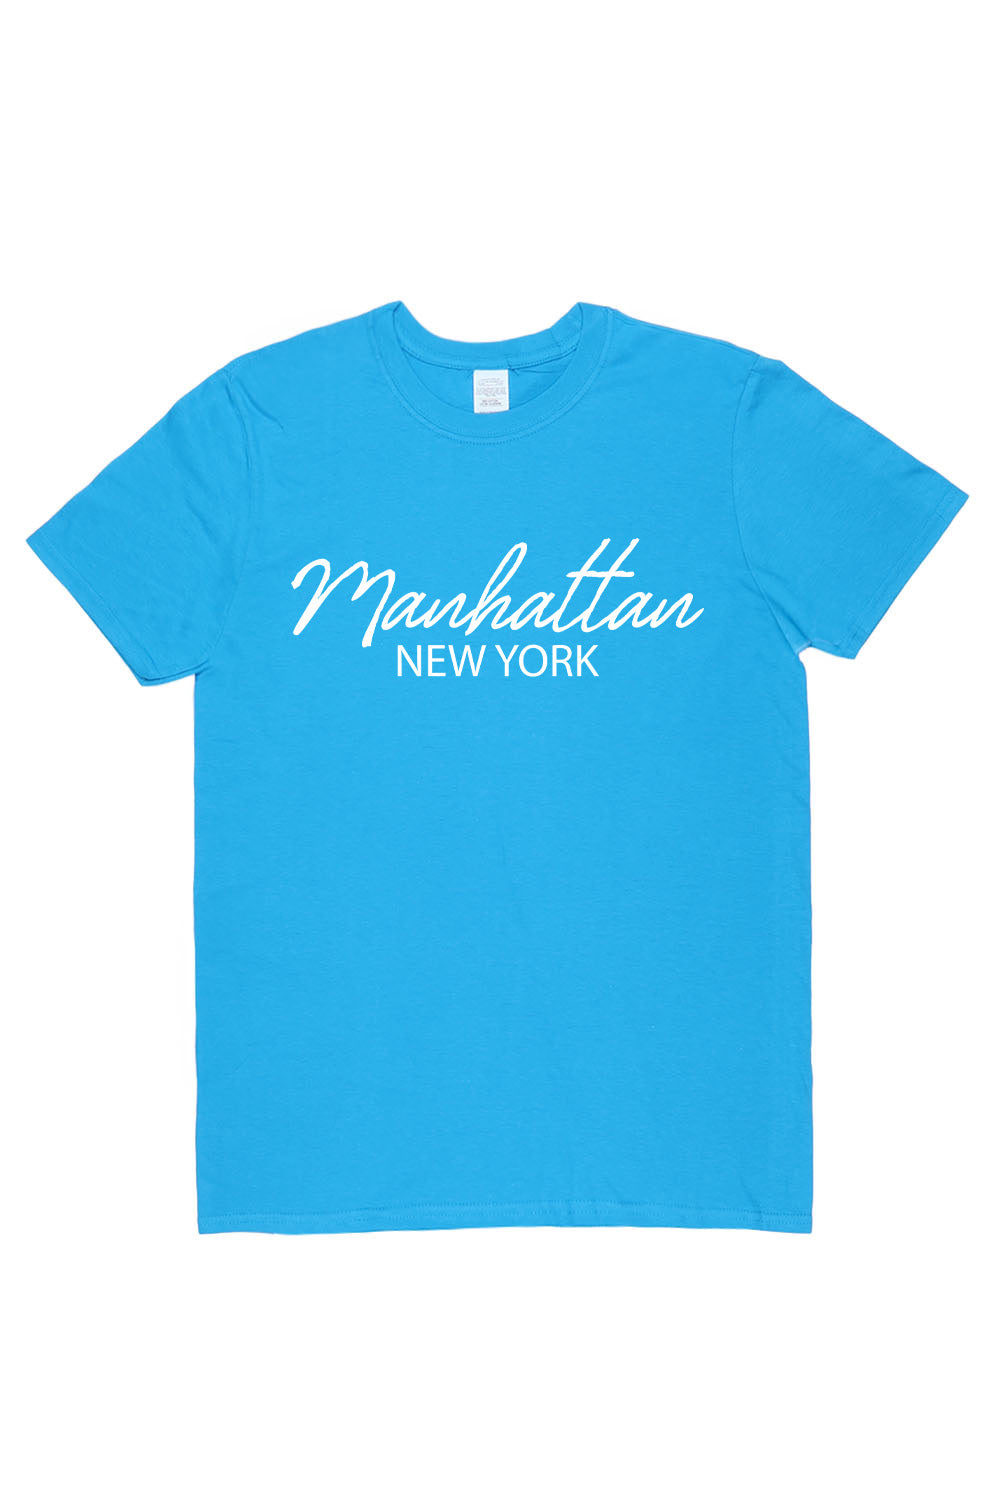 Manhattan T-Shirt in Sapphire Blue (Custom Packs)